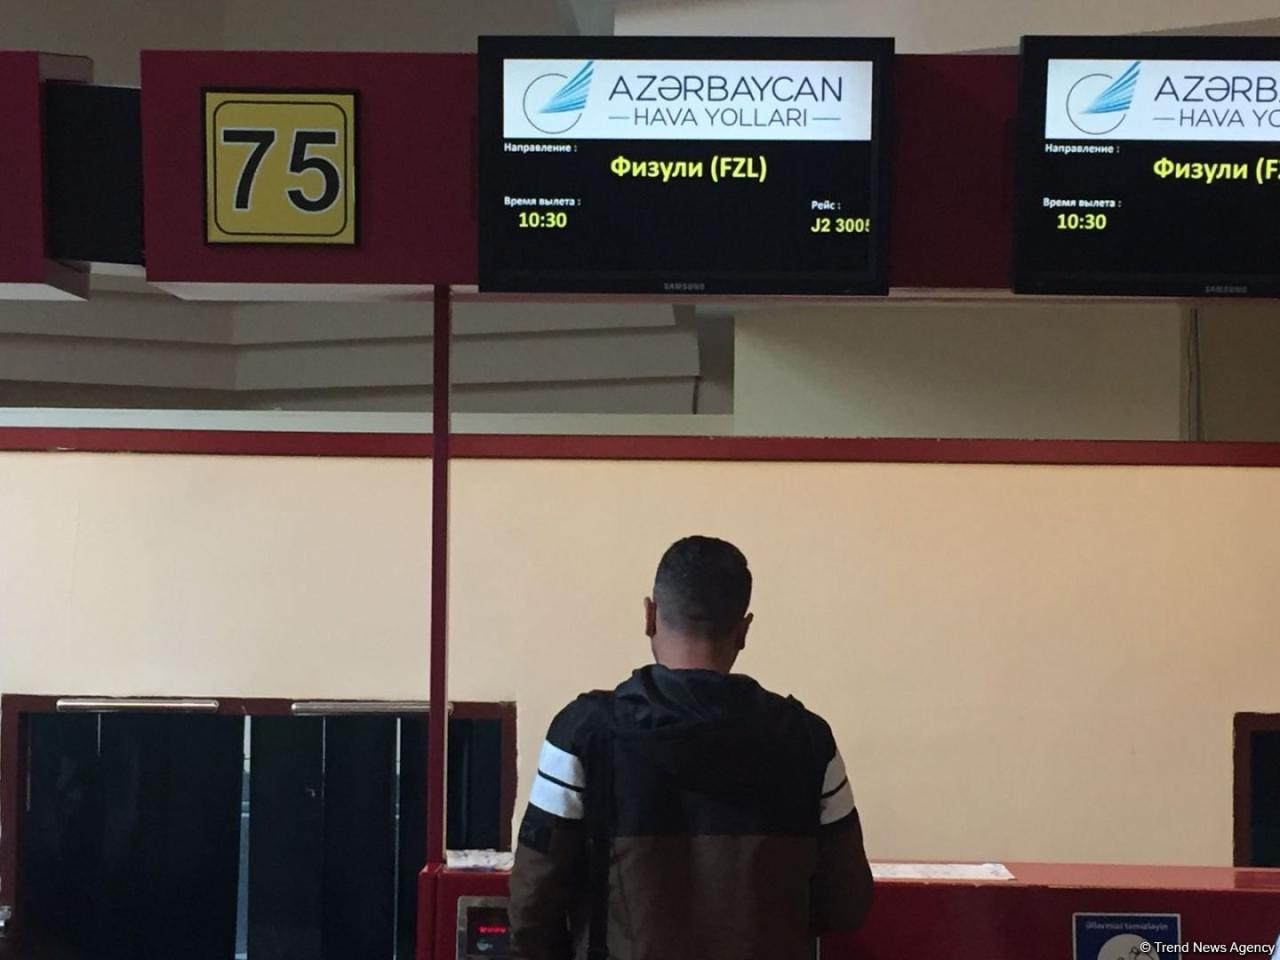 Photo of the day: Registration for Baku-Fuzuli flight in Azerbaijan